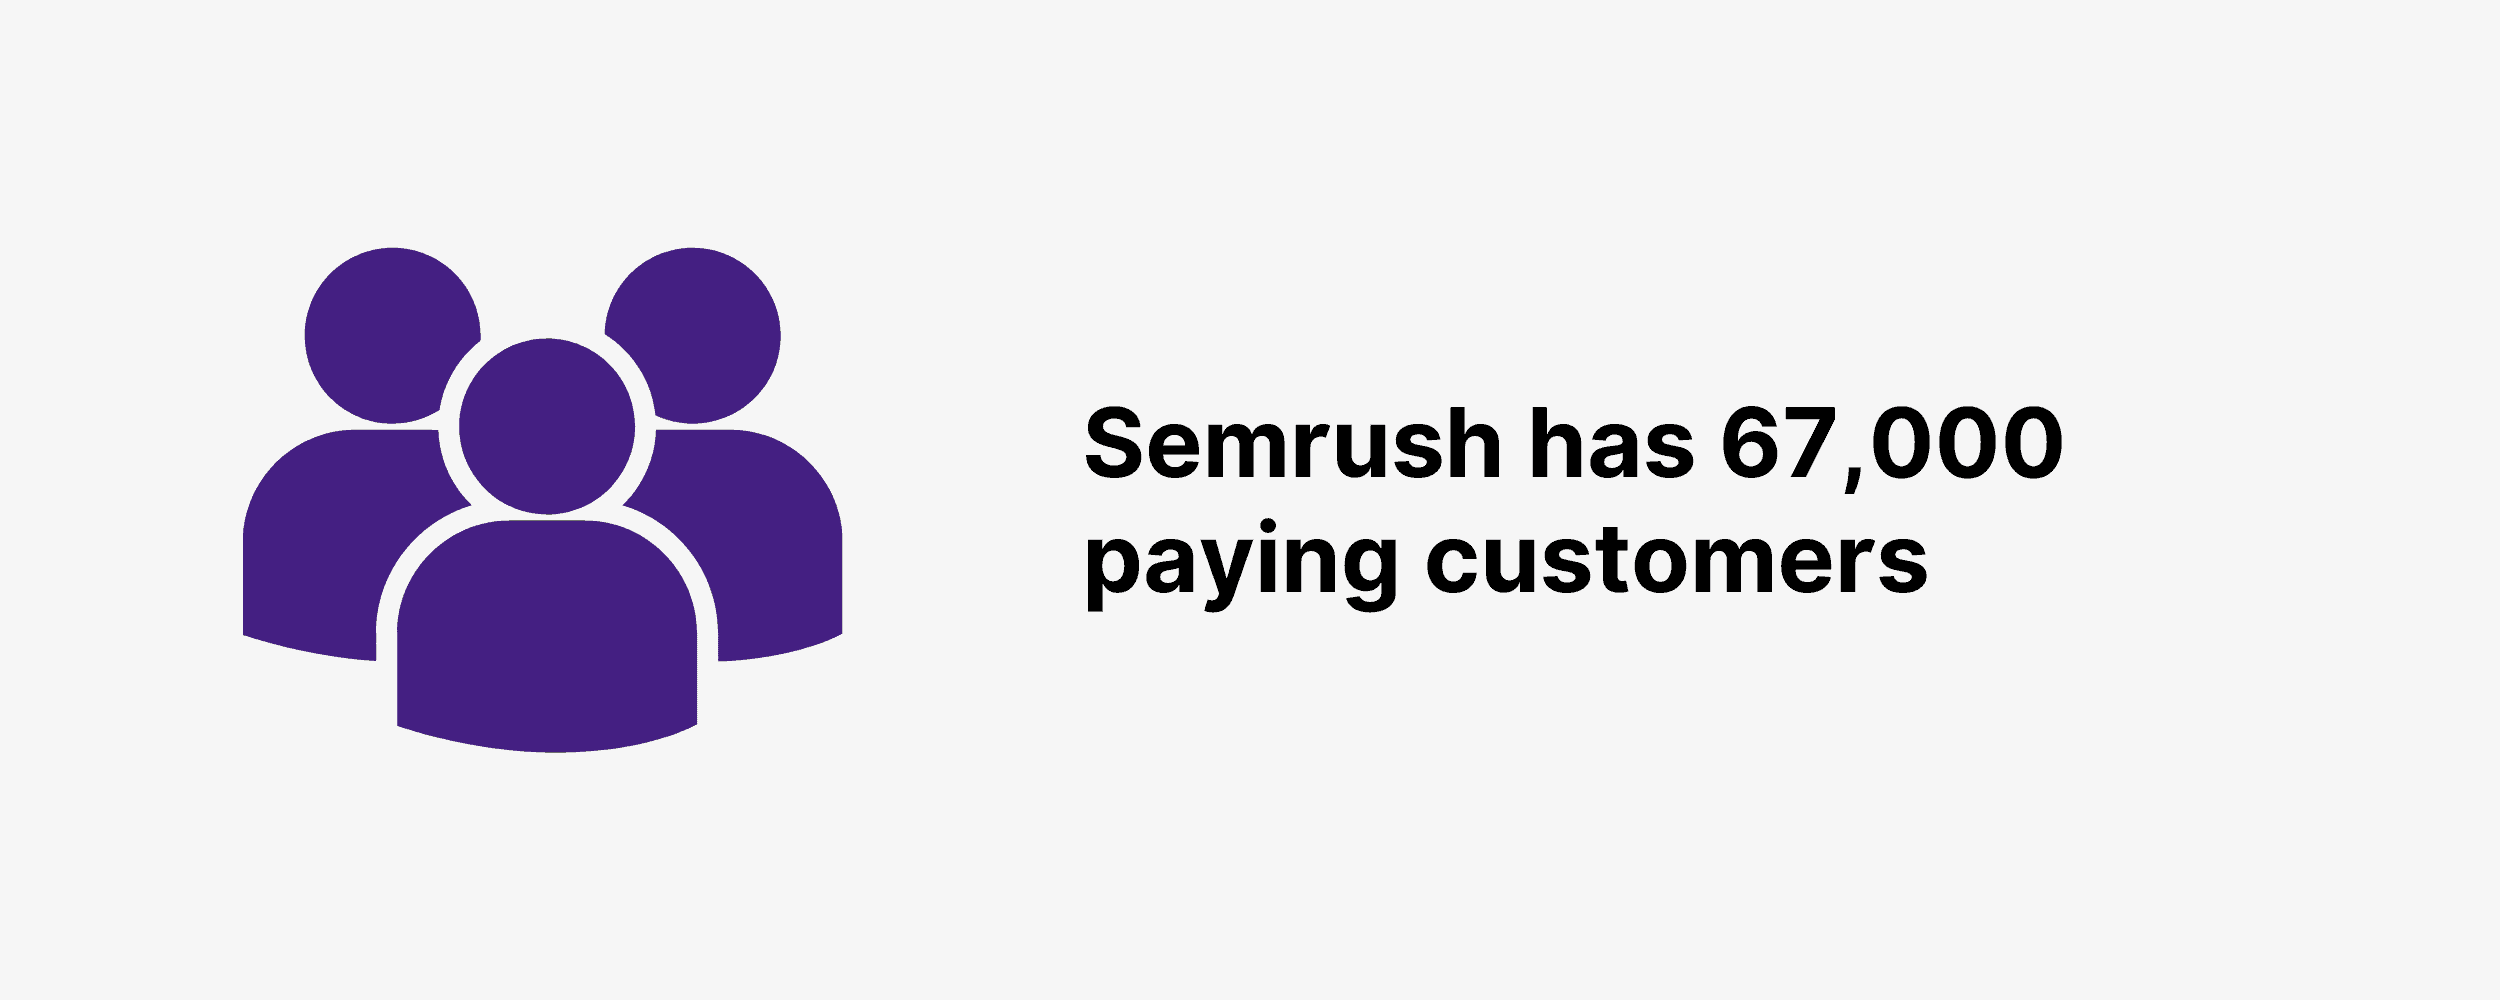 Semrush has 67,000 paying customers